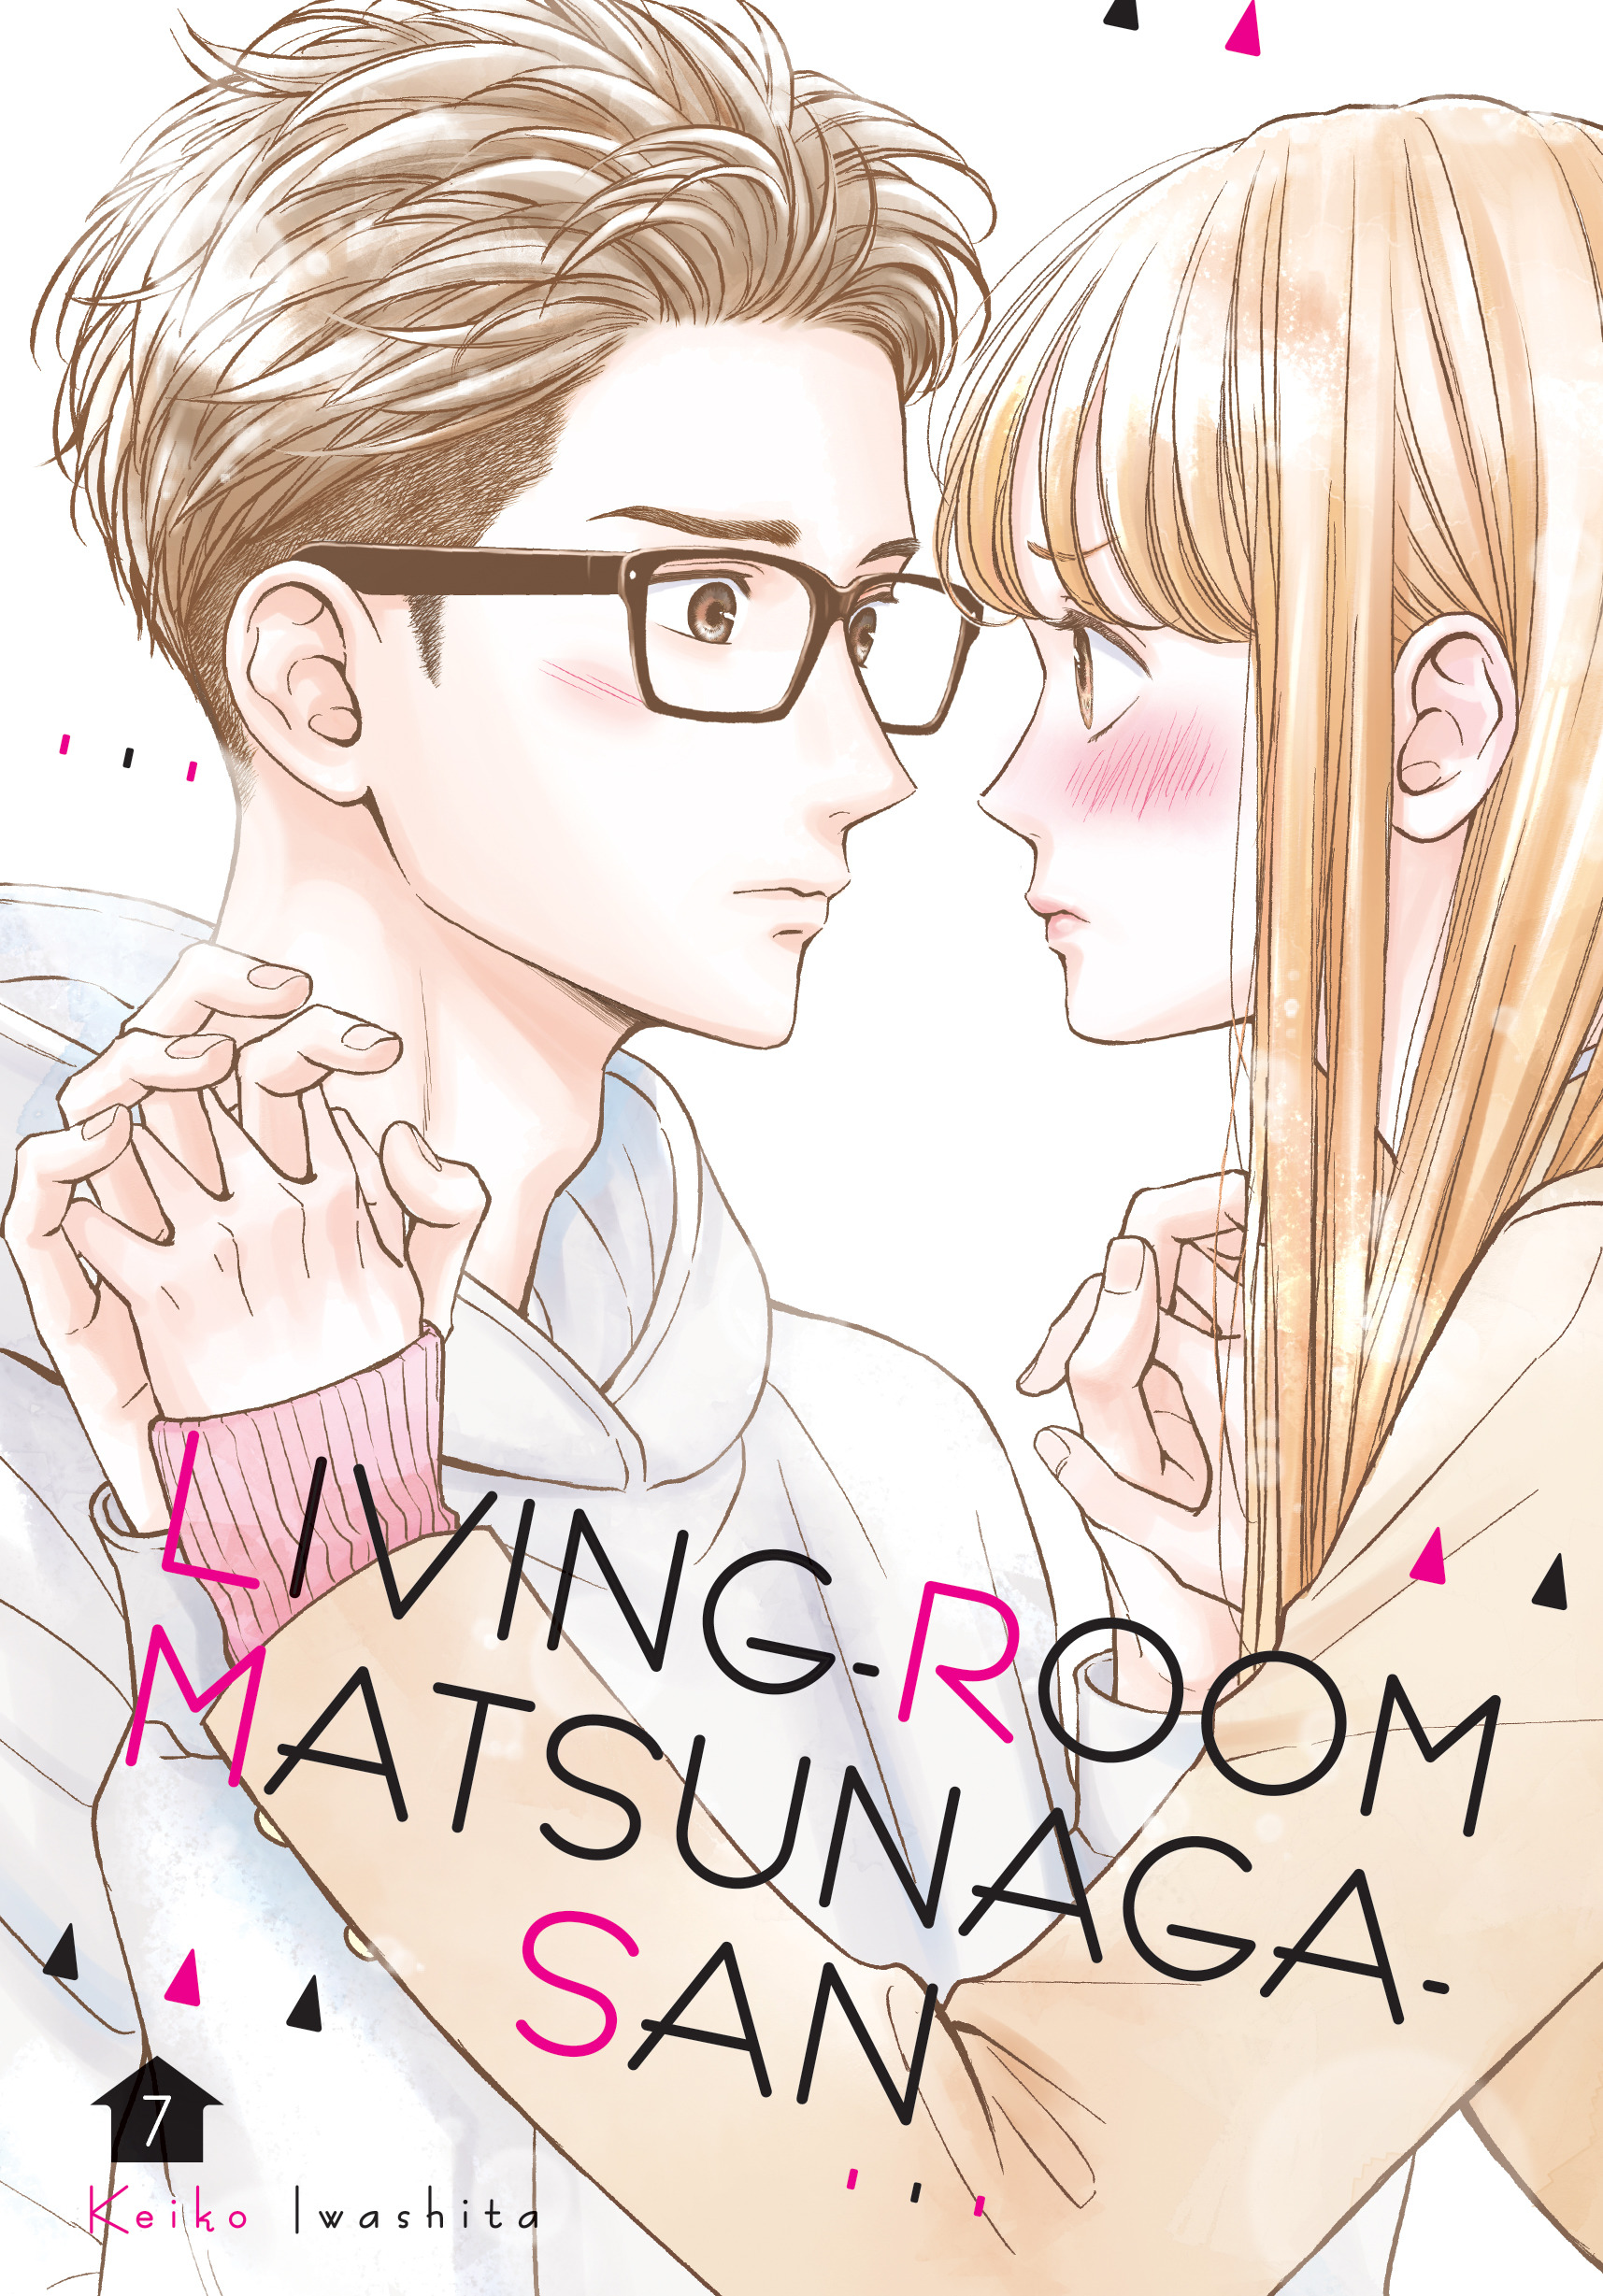 Living Room Matsunaga San Manga Volume 7